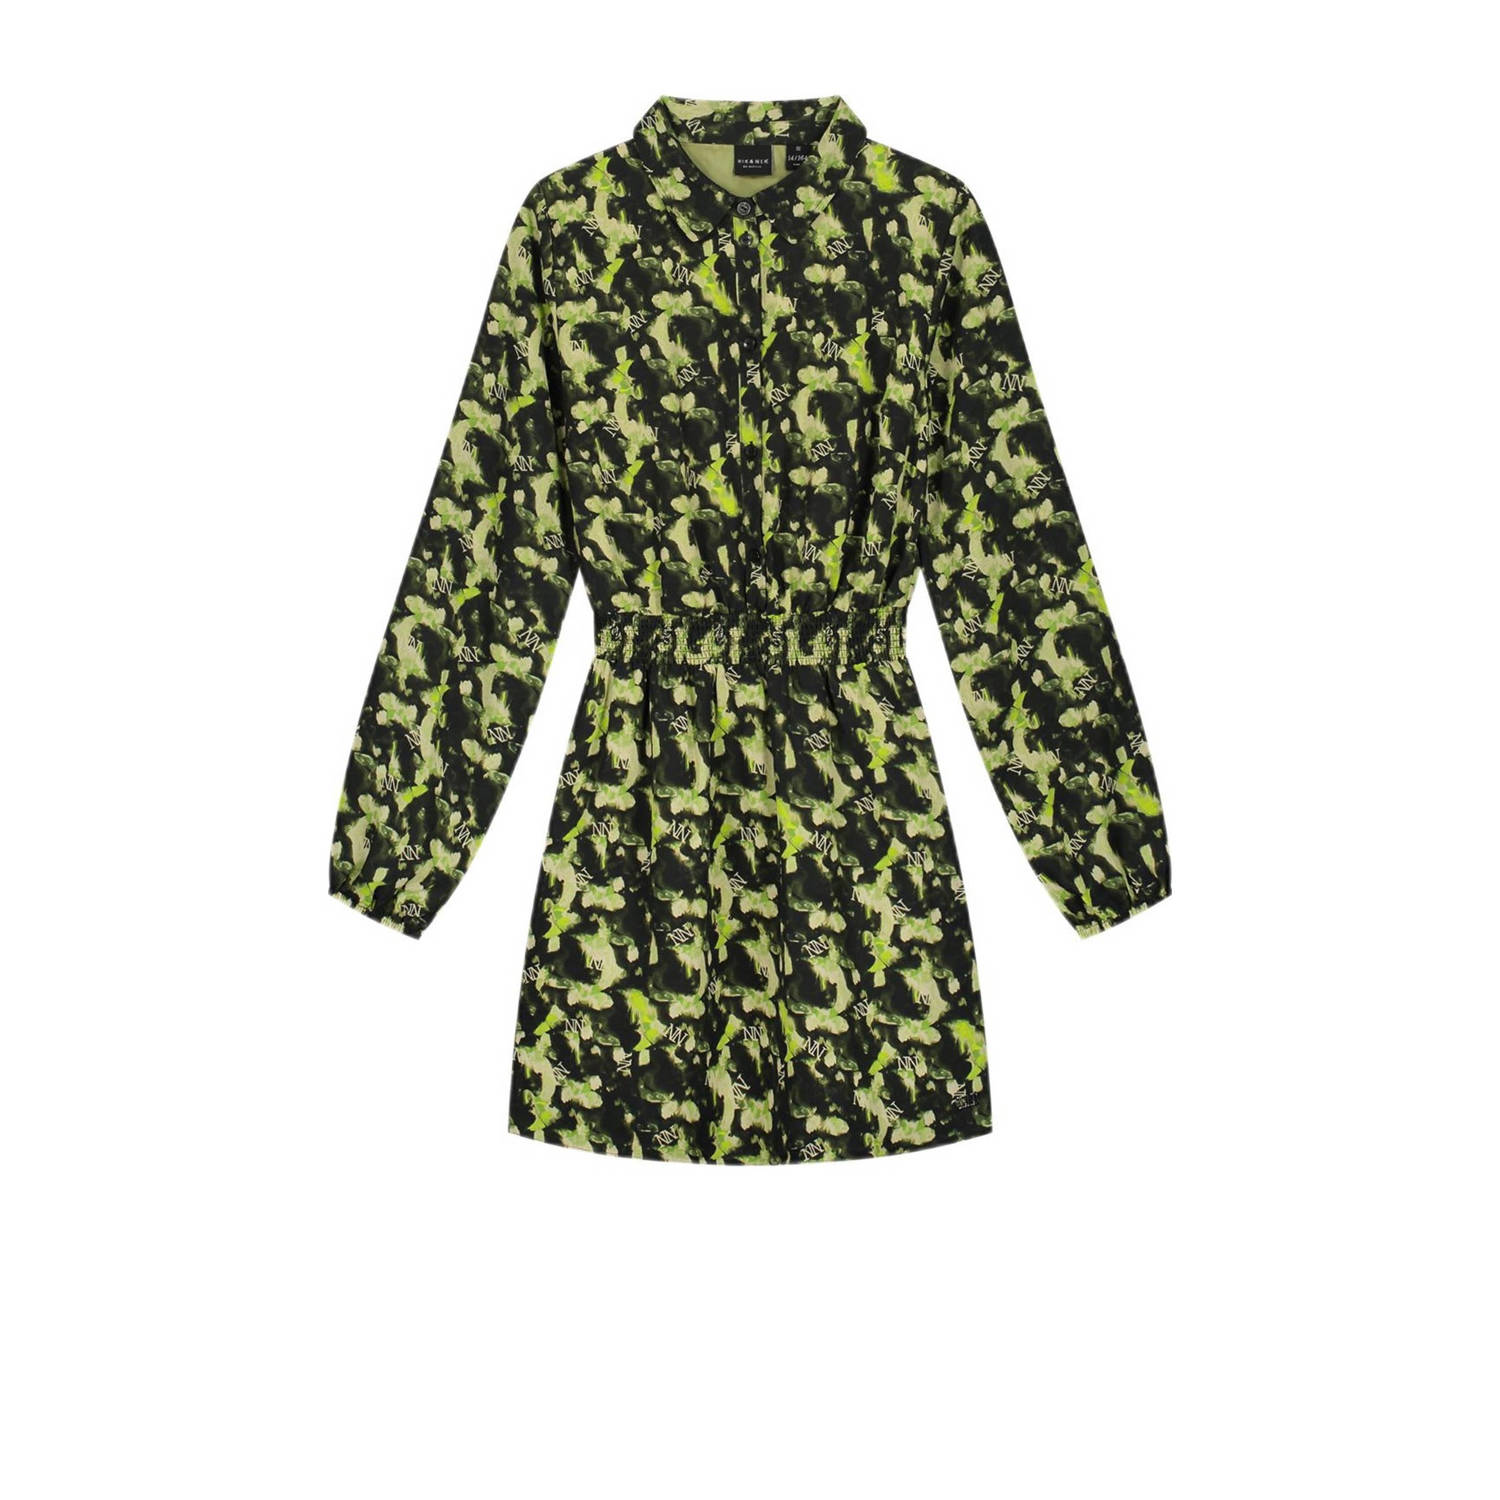 NIK&NIK gebloemde blousejurk Vonne licht groen olijfgroen Meisjes Polyester Klassieke kraag 140